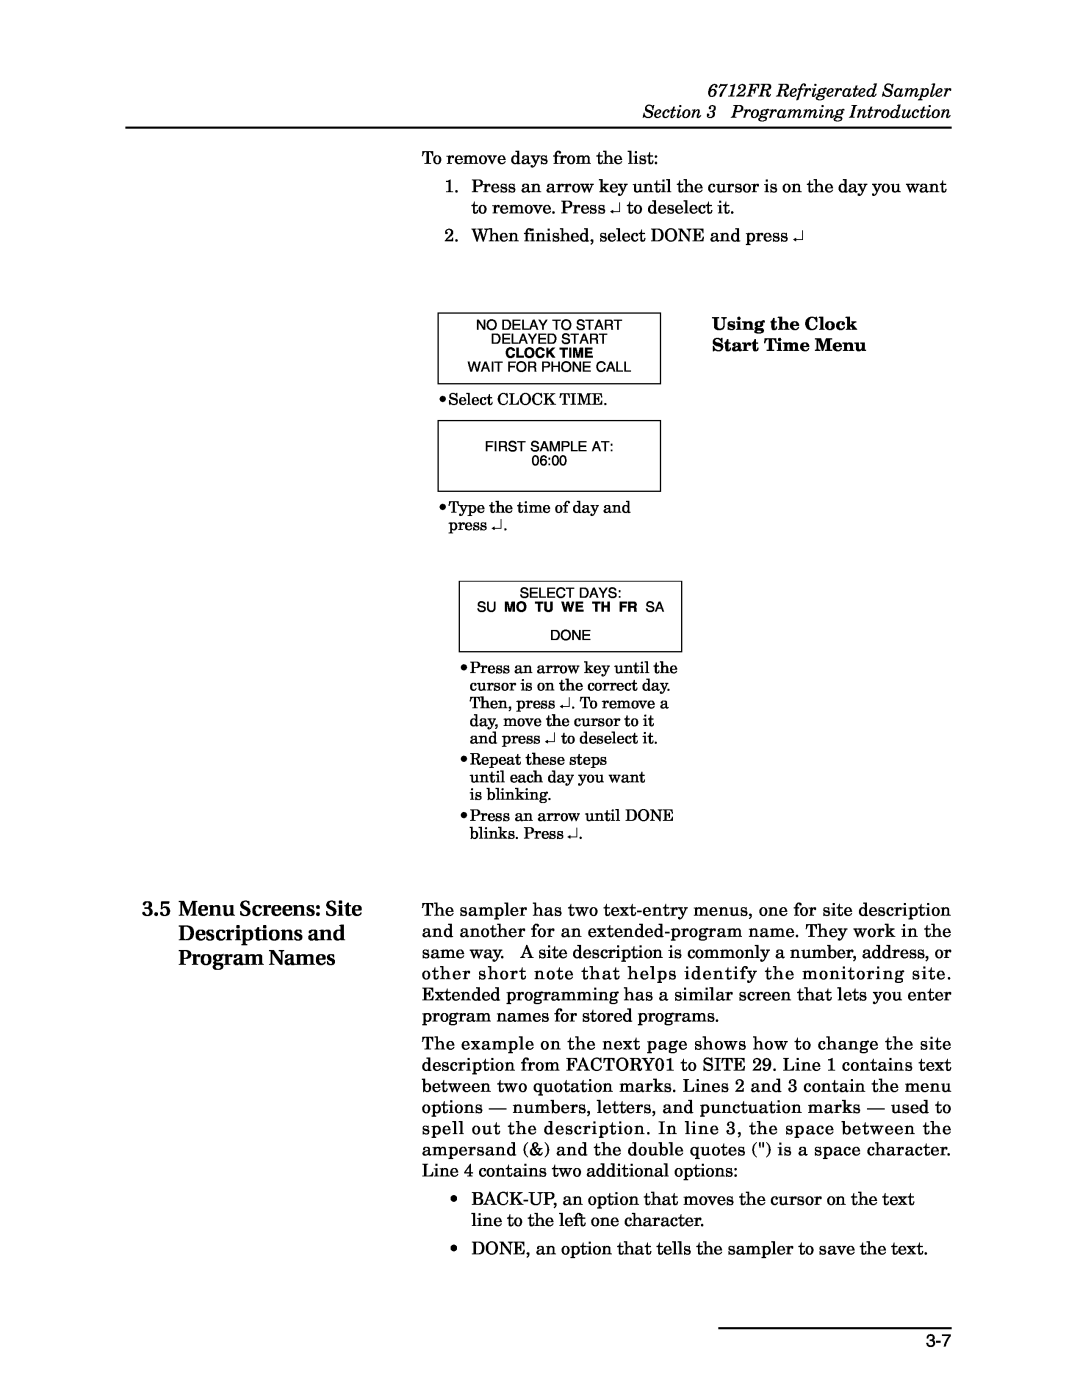 Teledyne manual Menu Screens Site Descriptions and Program Names, 6712FR Refrigerated Sampler Programming Introduction 